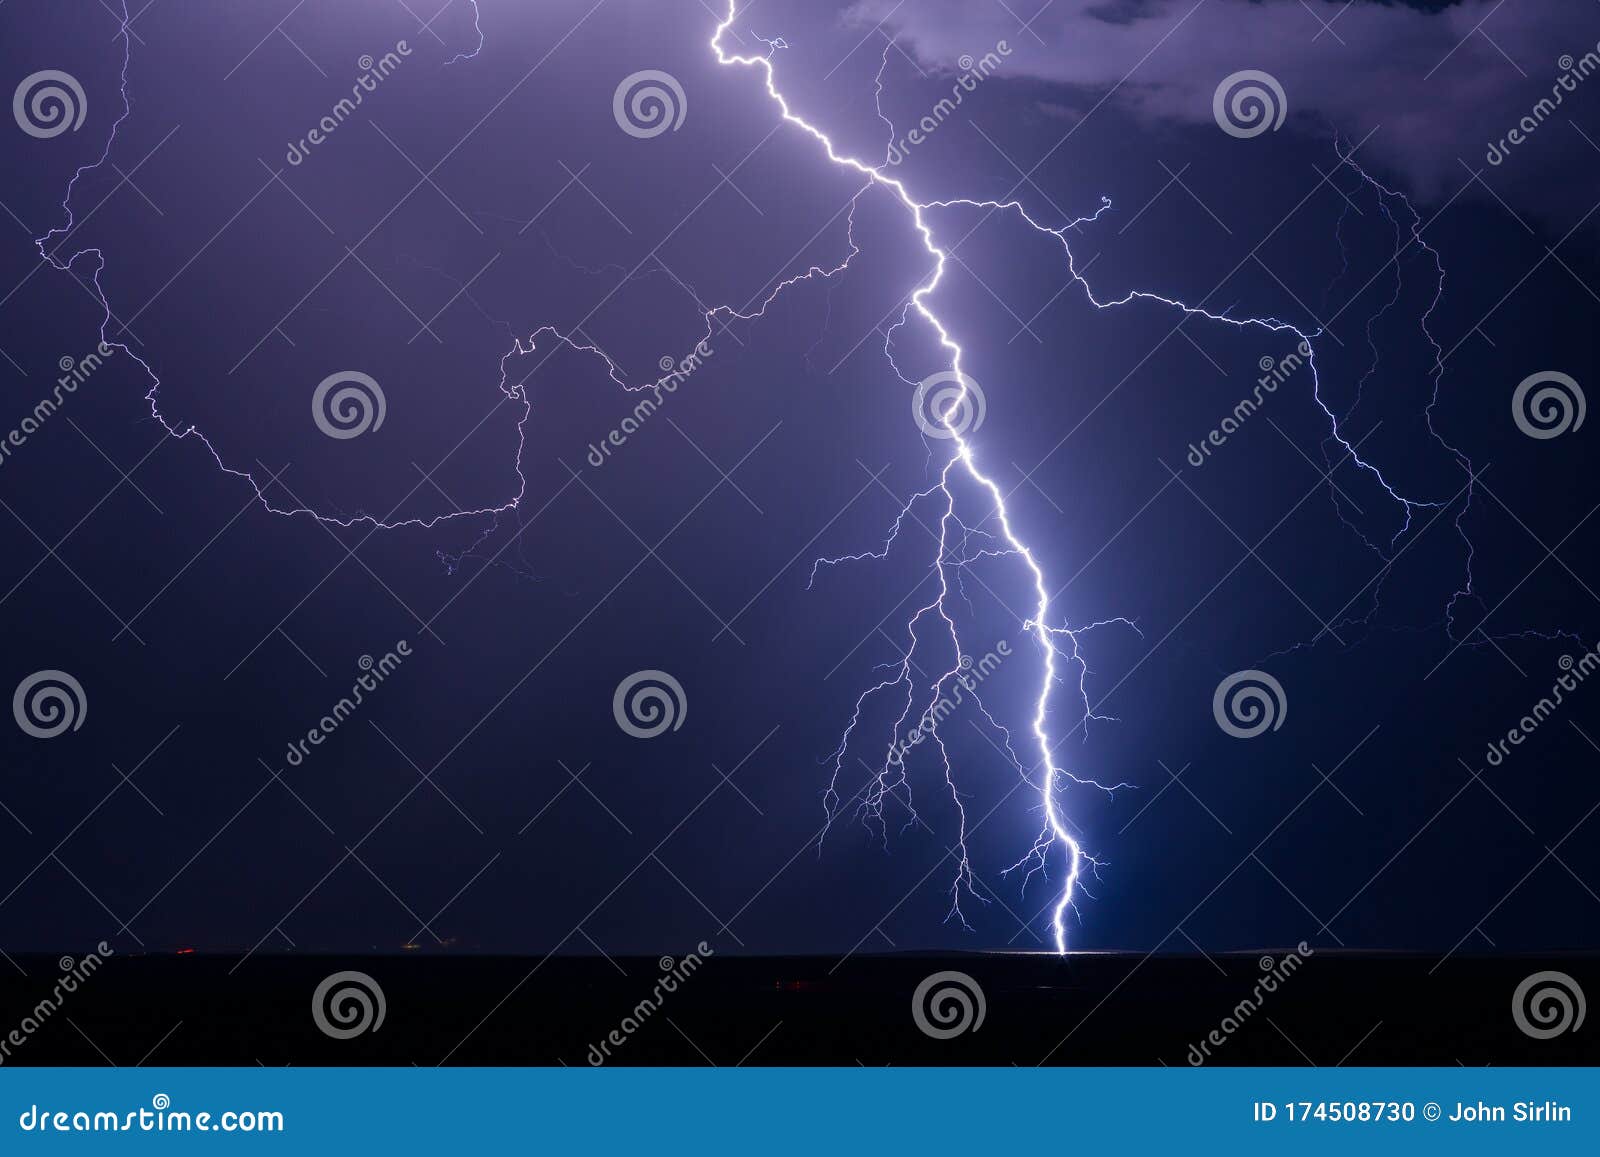 lightning bolt strike from an electrical storm